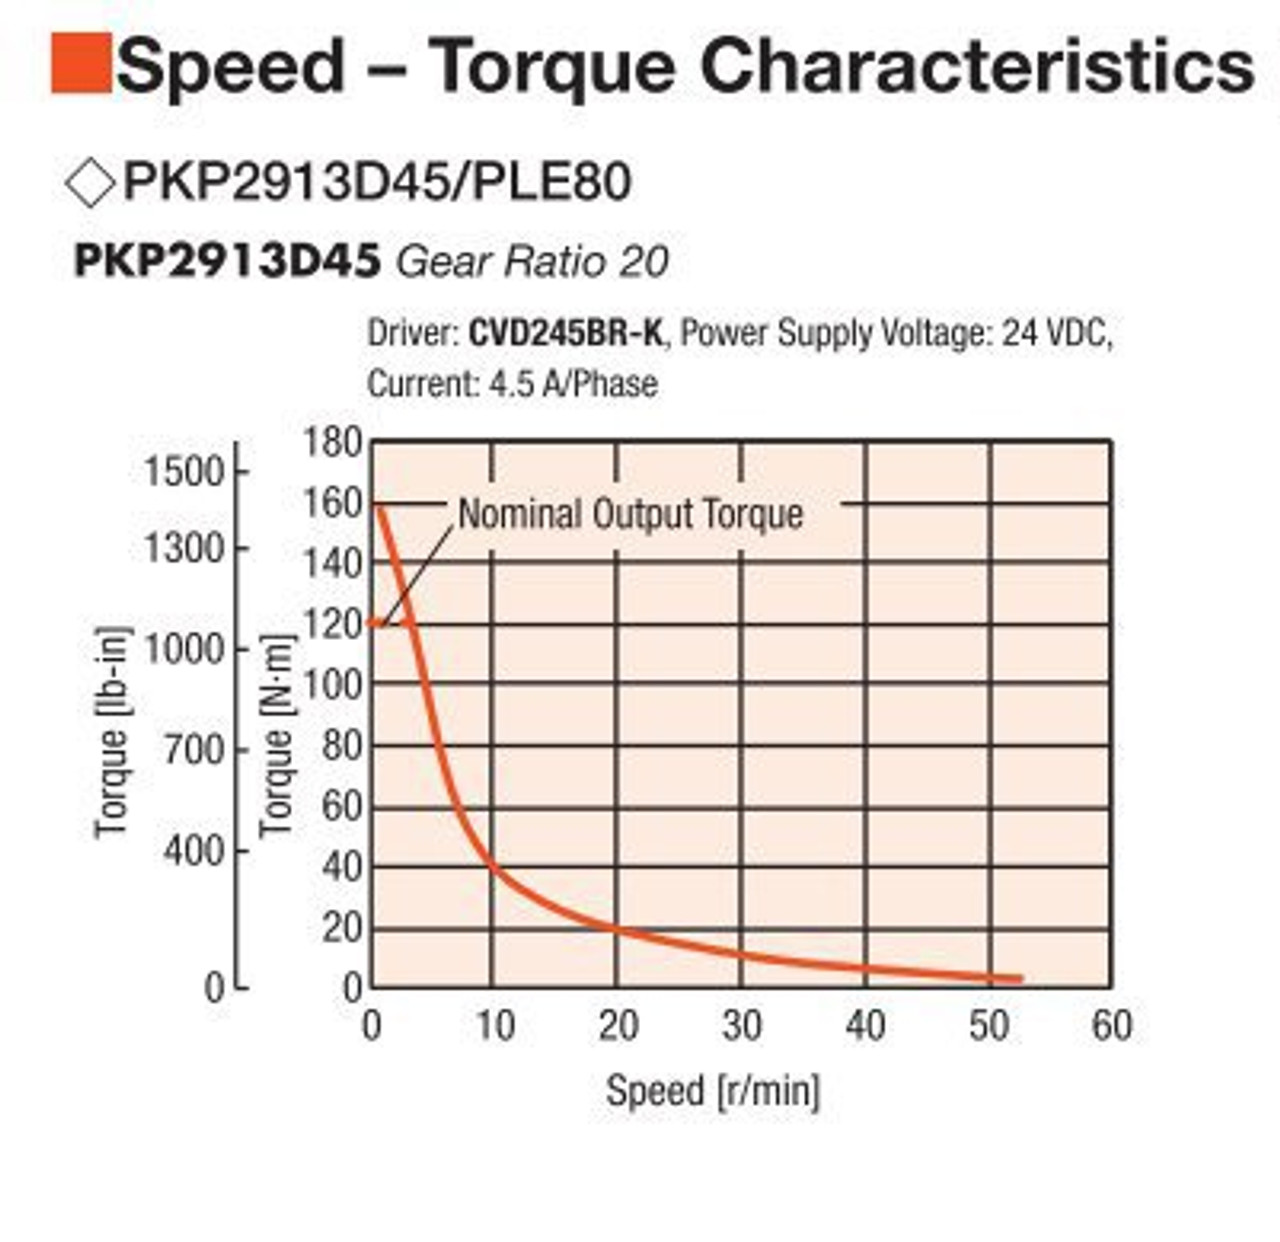 PKP2913D45B / PLE80-20B / P00029 - Speed-Torque